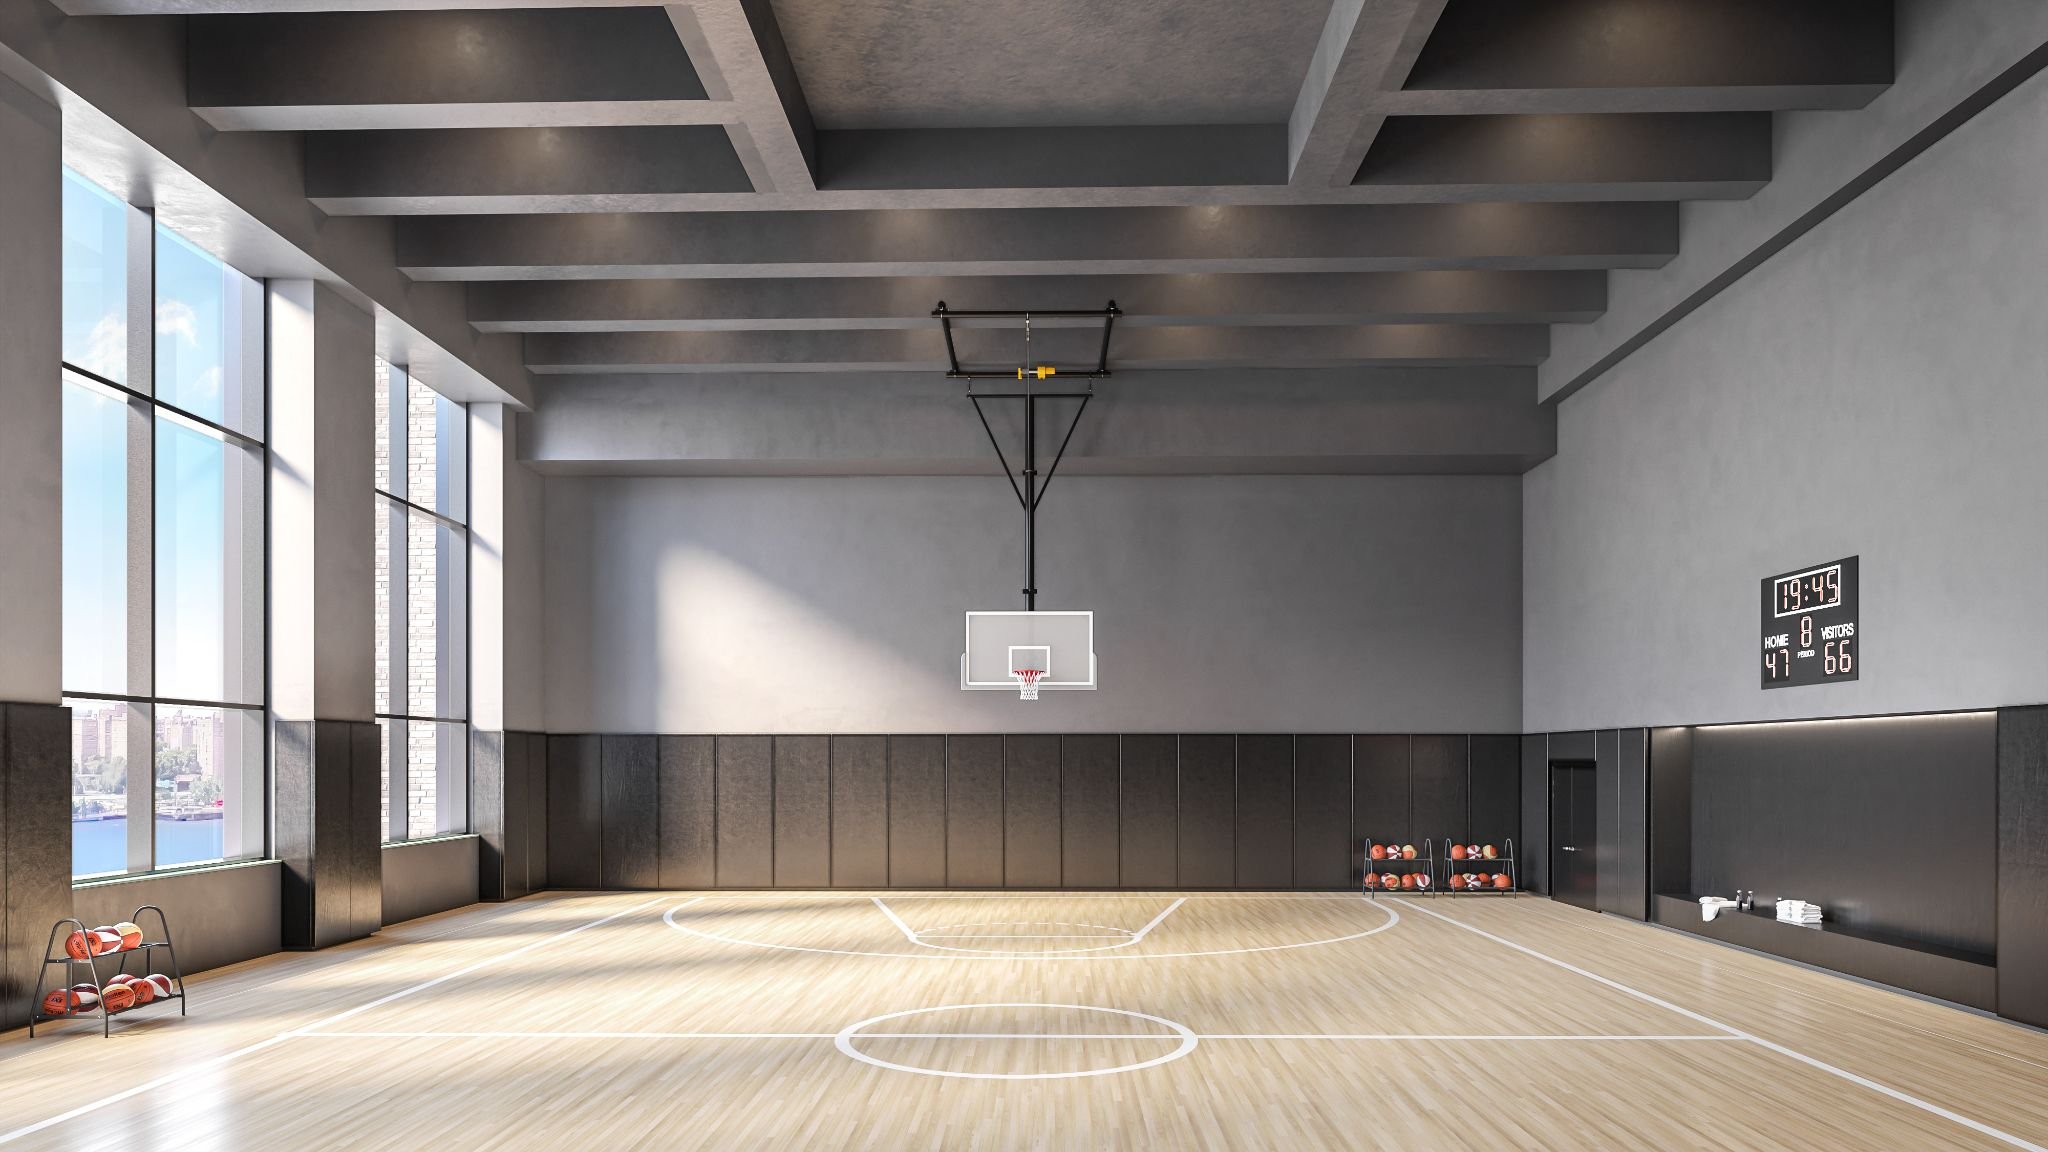 NYC Basketball League  NYC Basketball Facilities in Manhattan